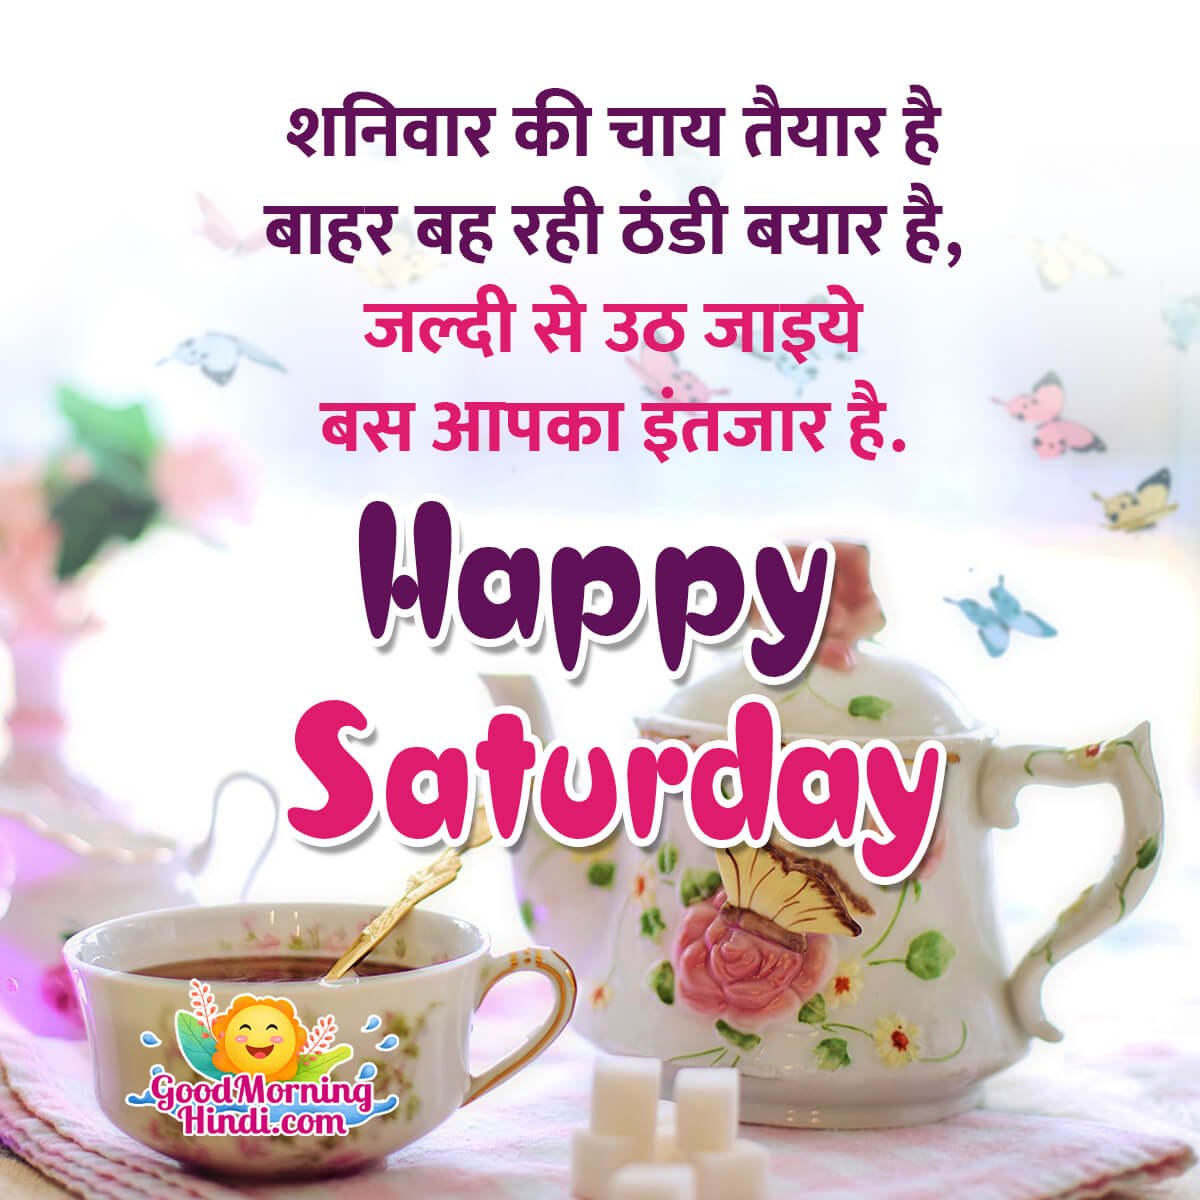 Happy Saturday Message In Hindi